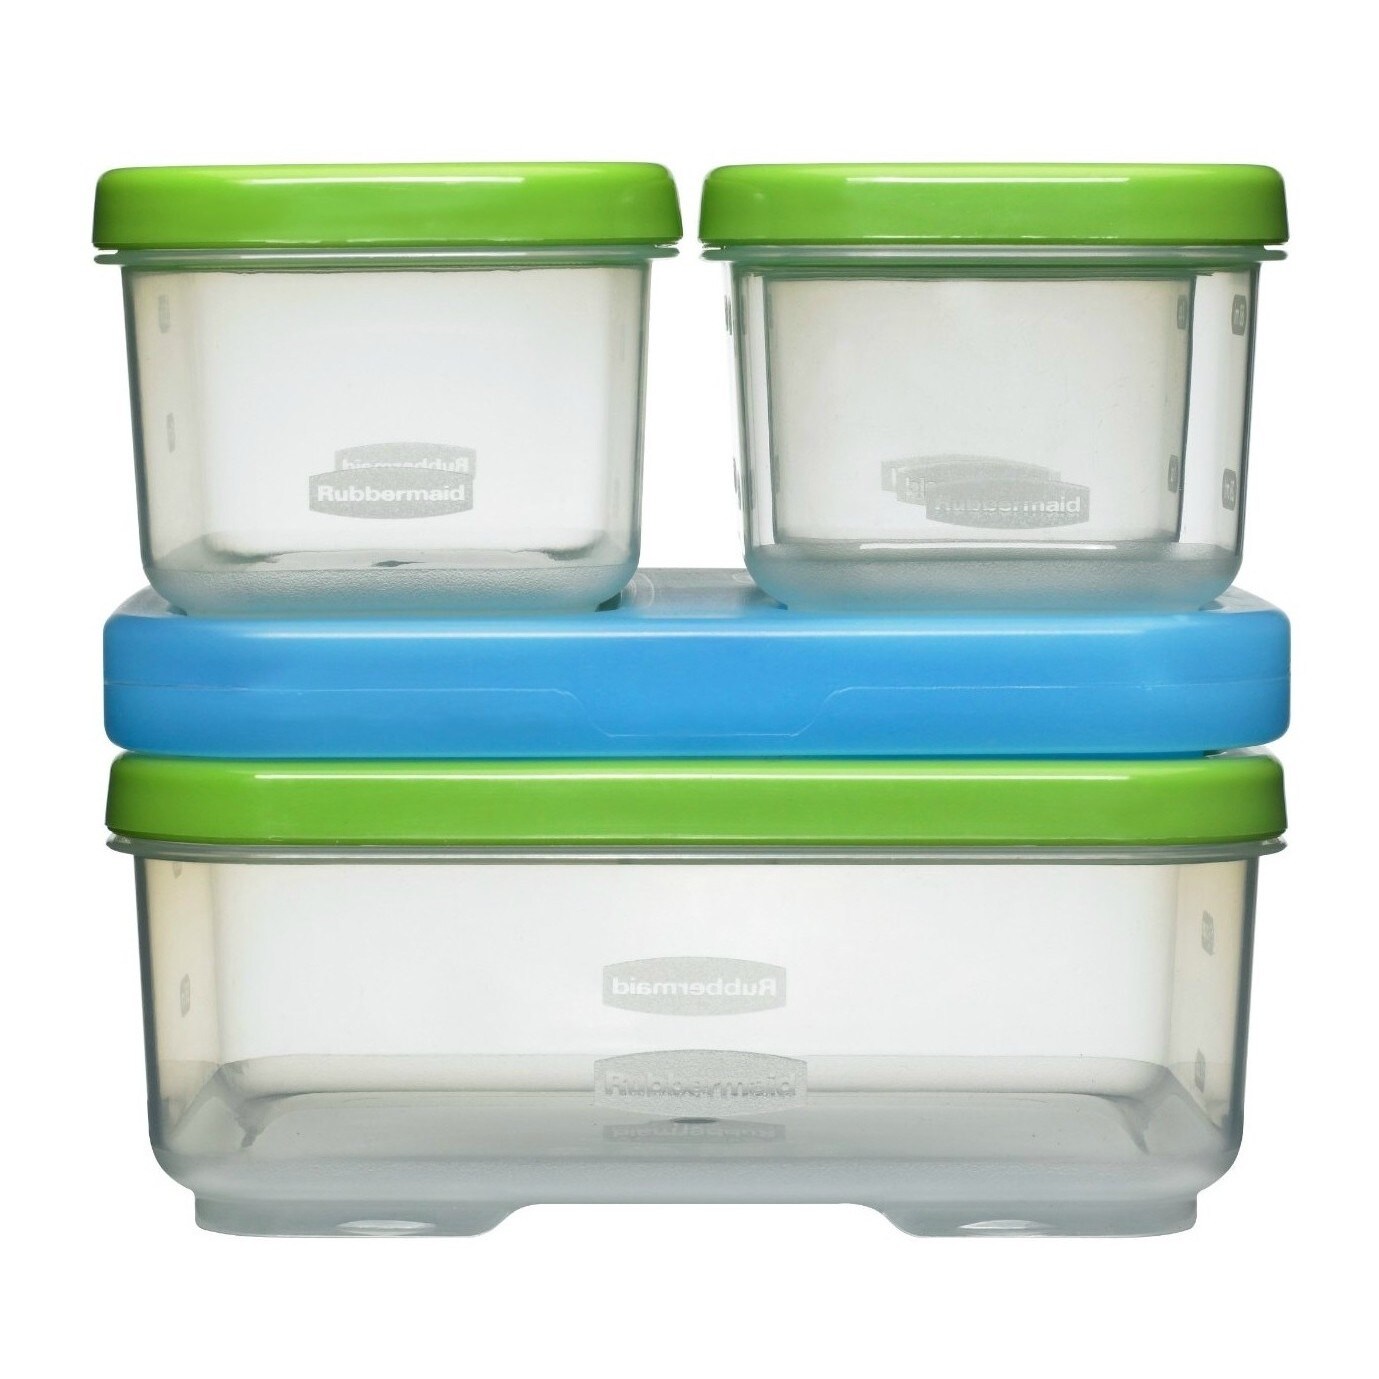 Shop Rubbermaid Lunch Blox Sandwich Kit Overstock 9358820 - rubbermaid freezer blox containers